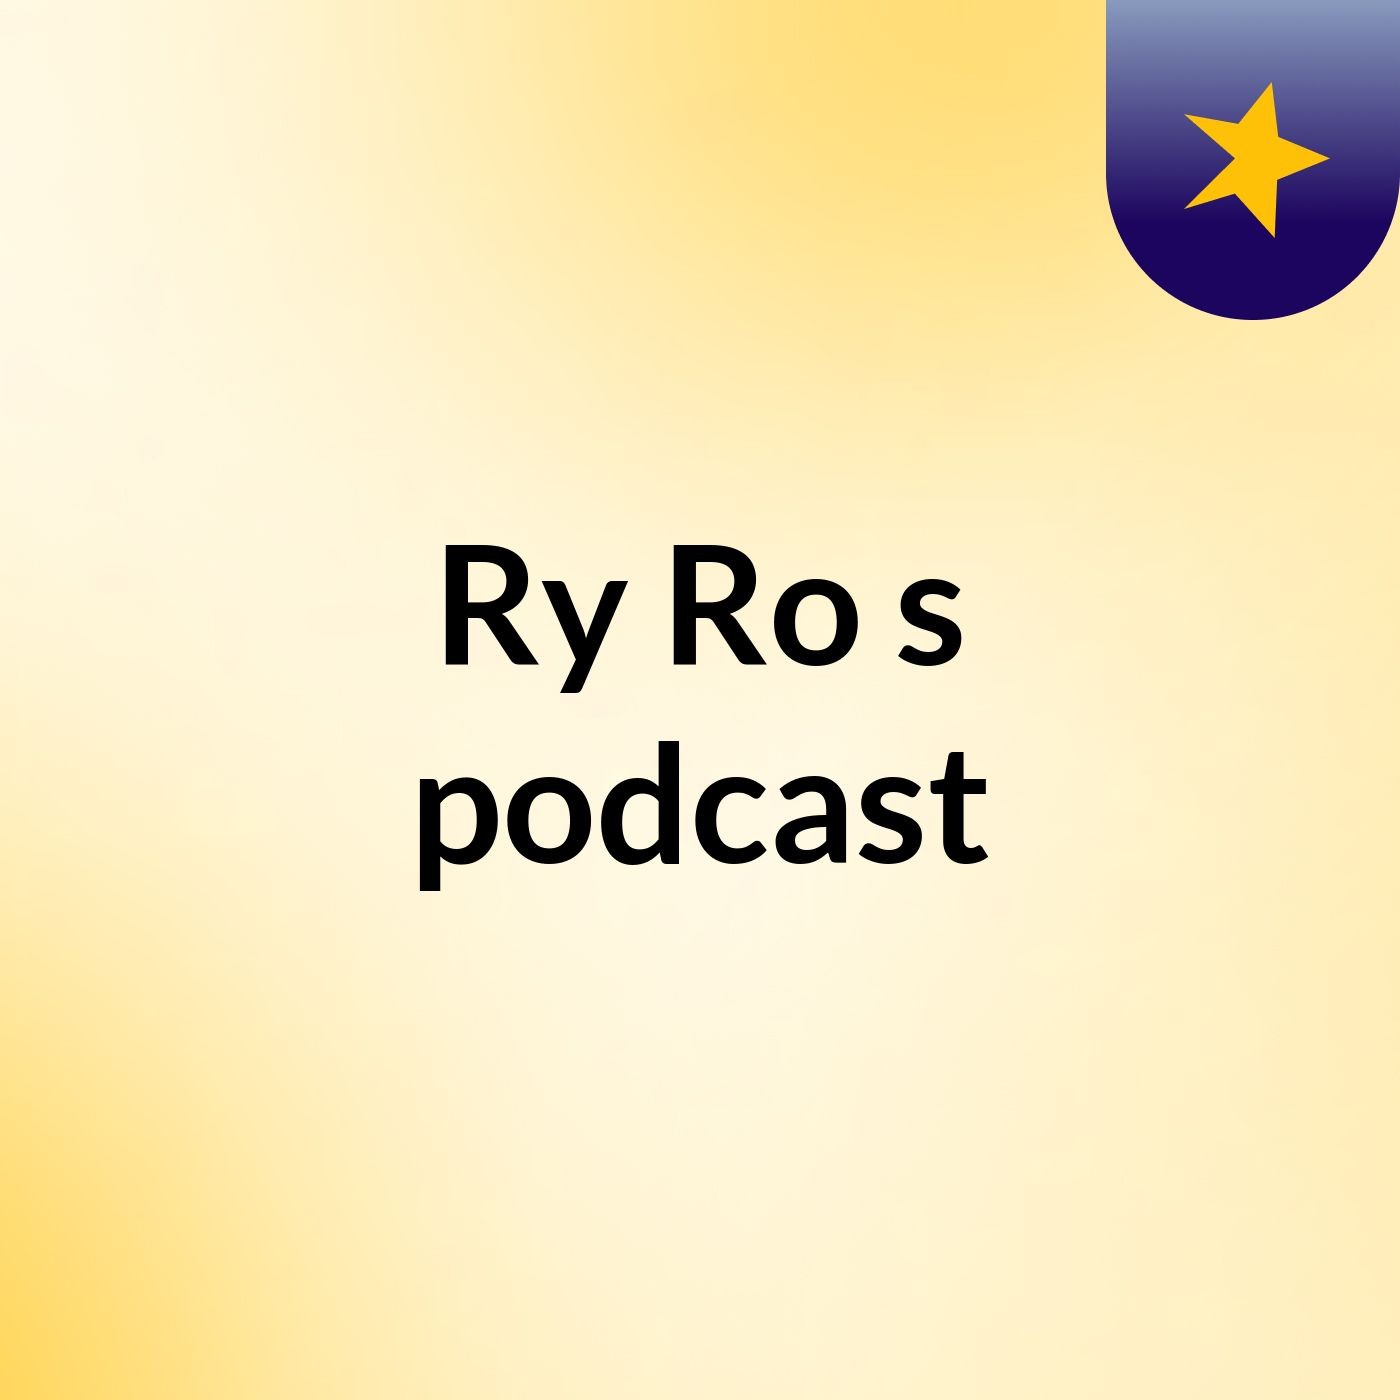 Ry Ro's podcast